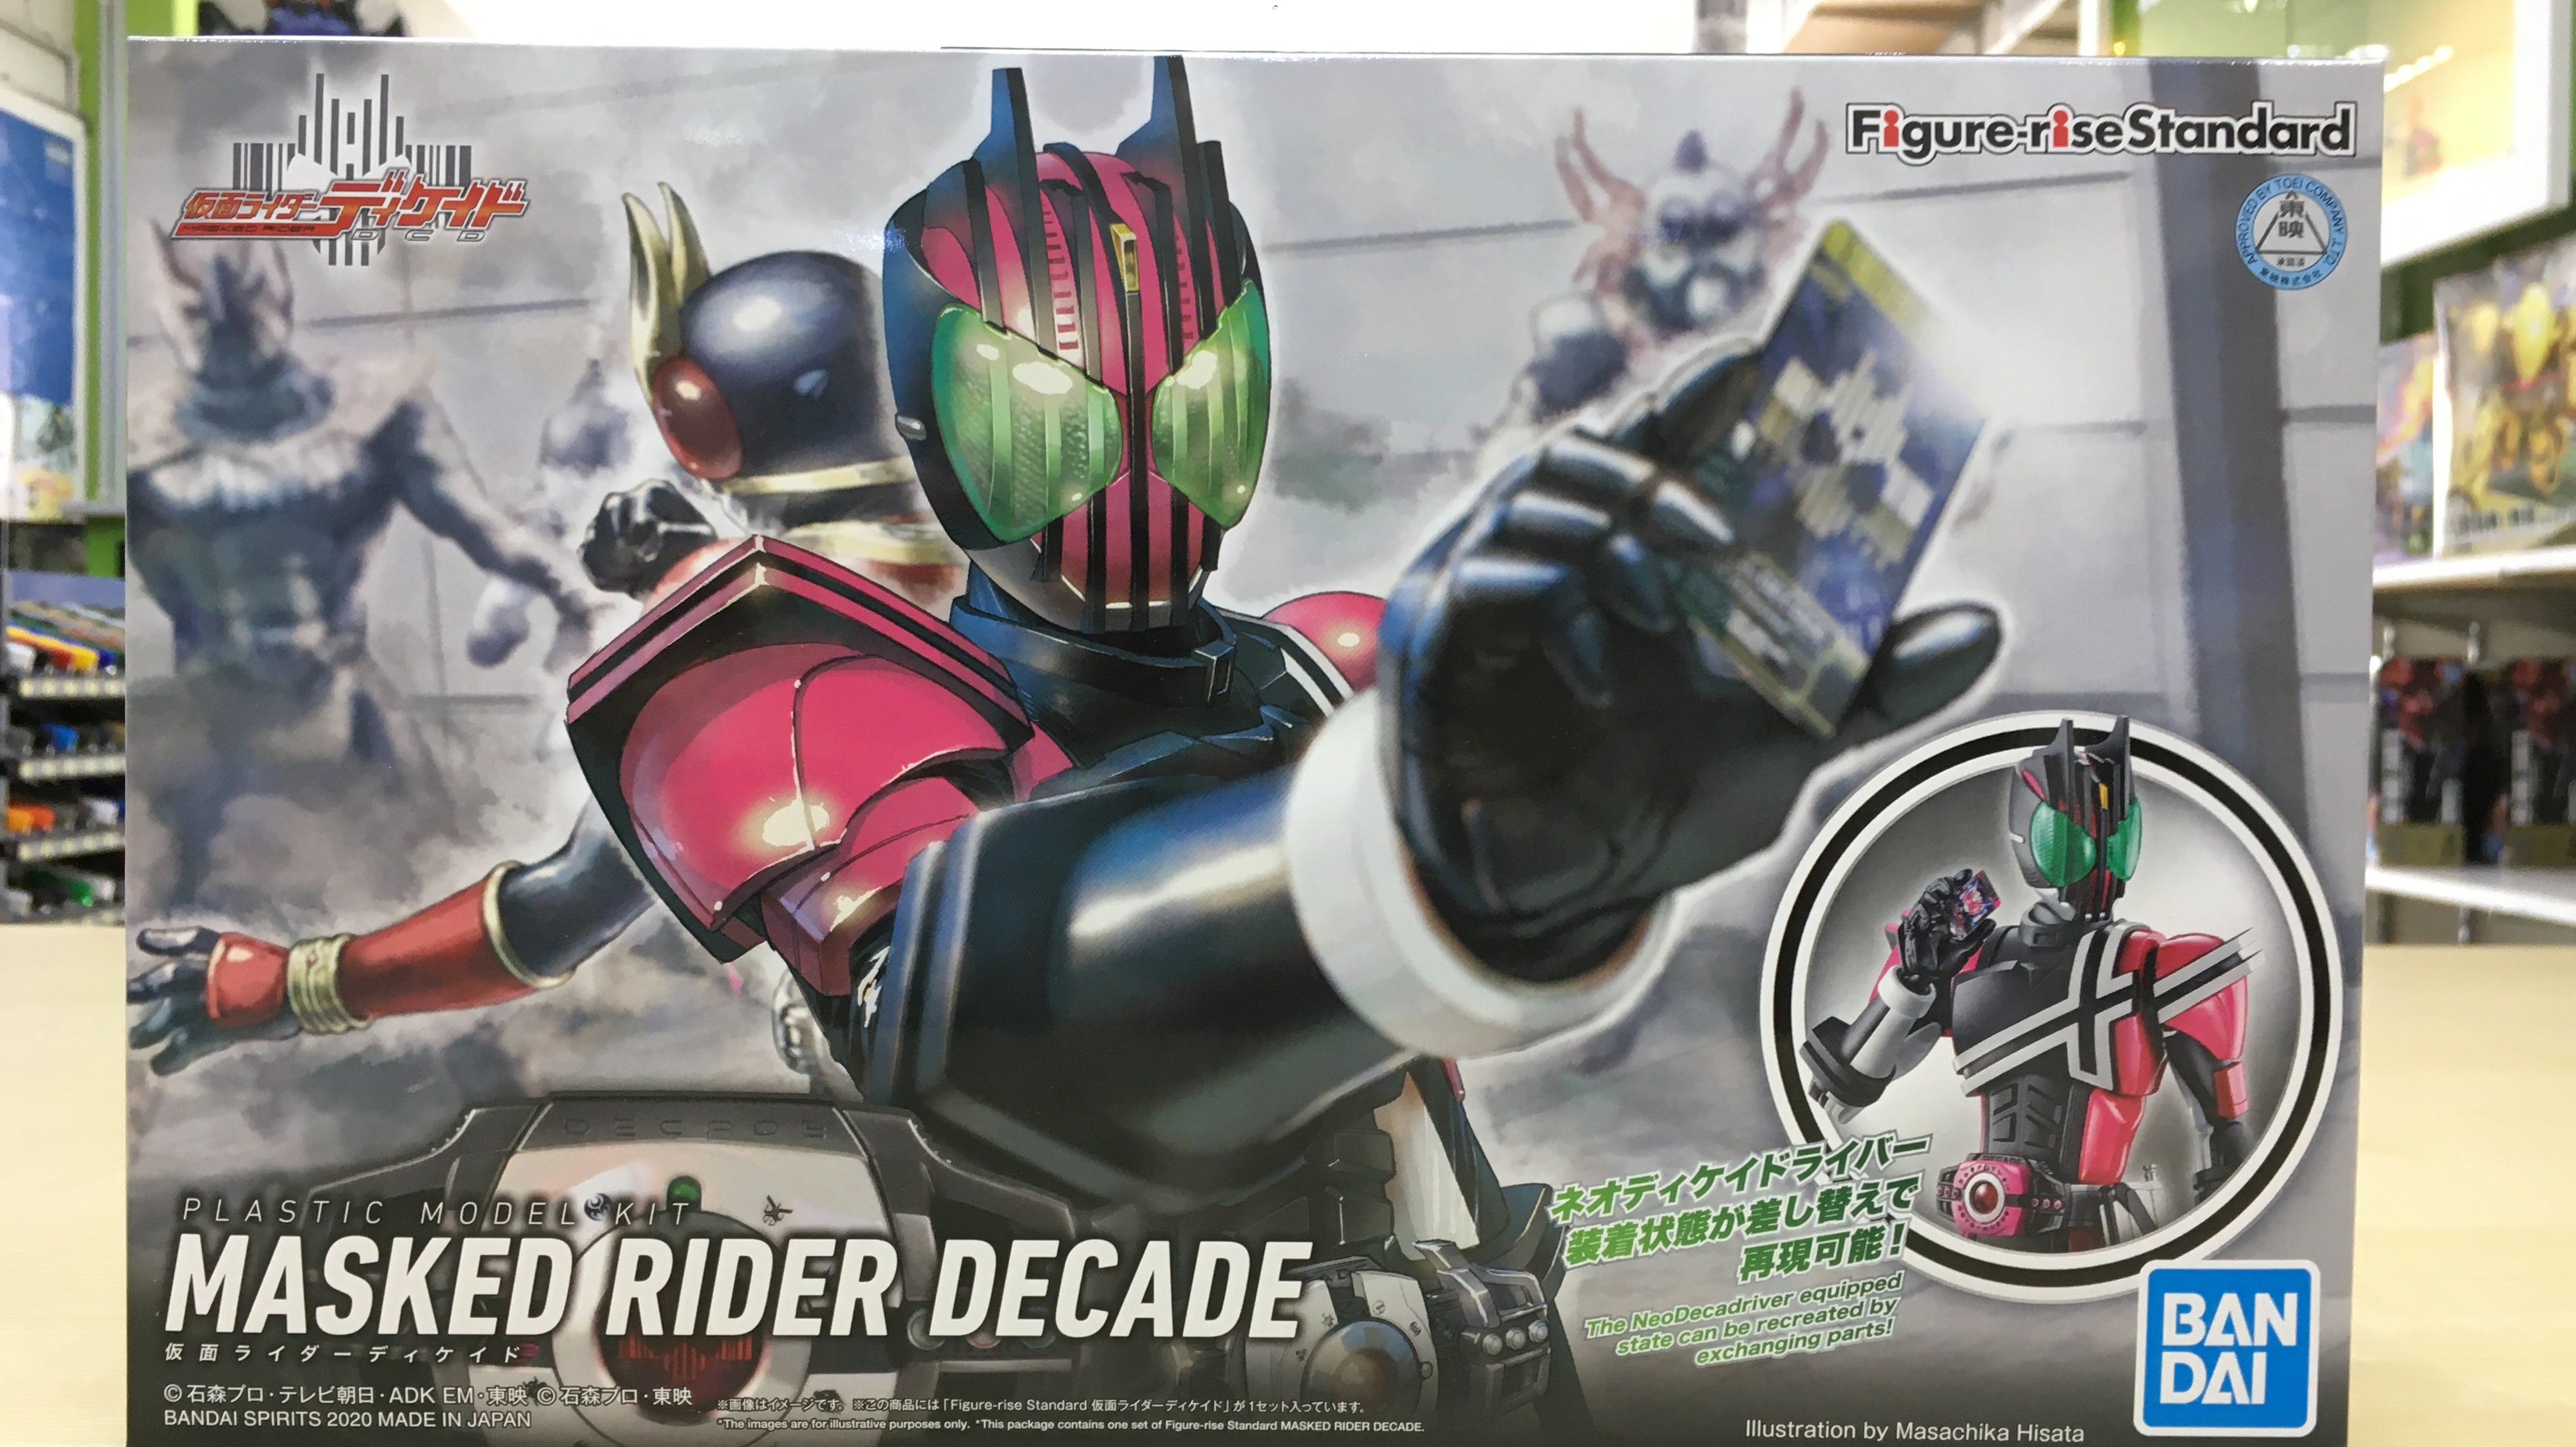 Figure-rise standard Masked Rider Decade